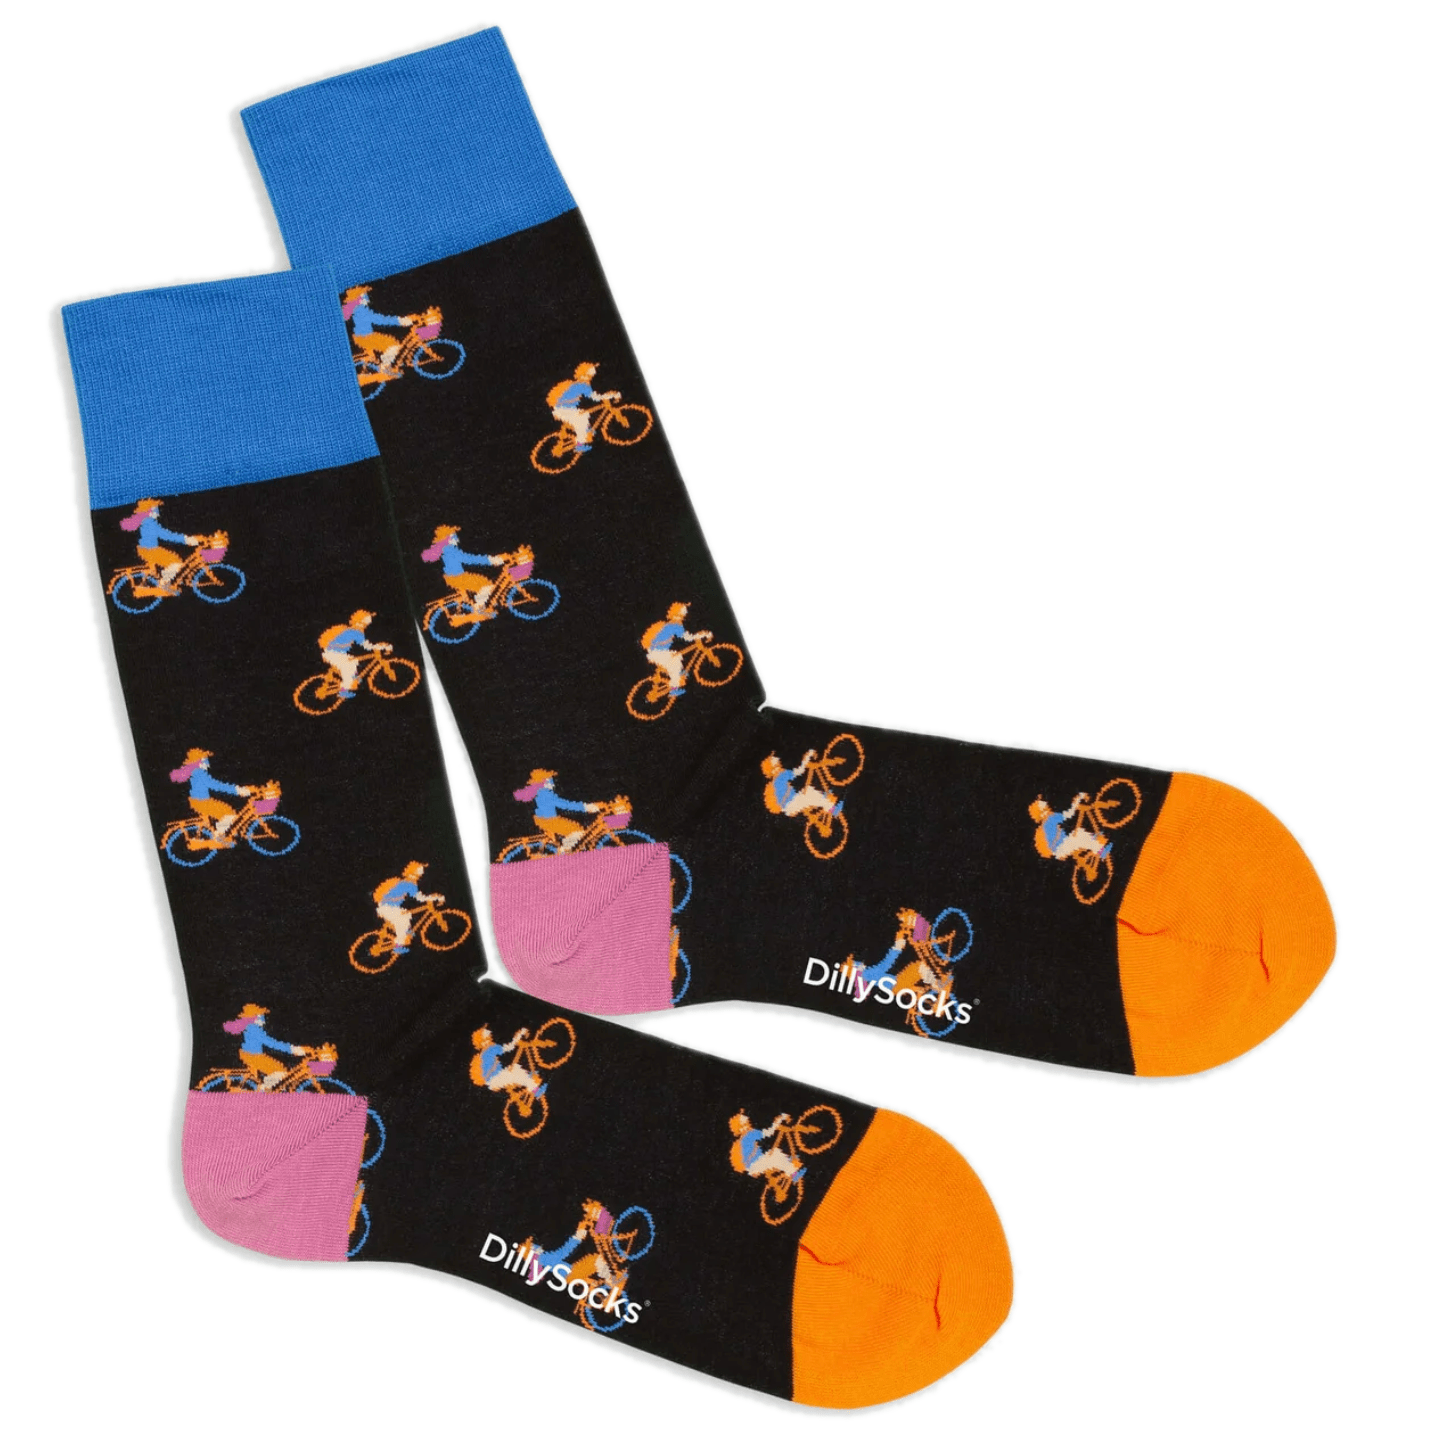 socks with bike pattern